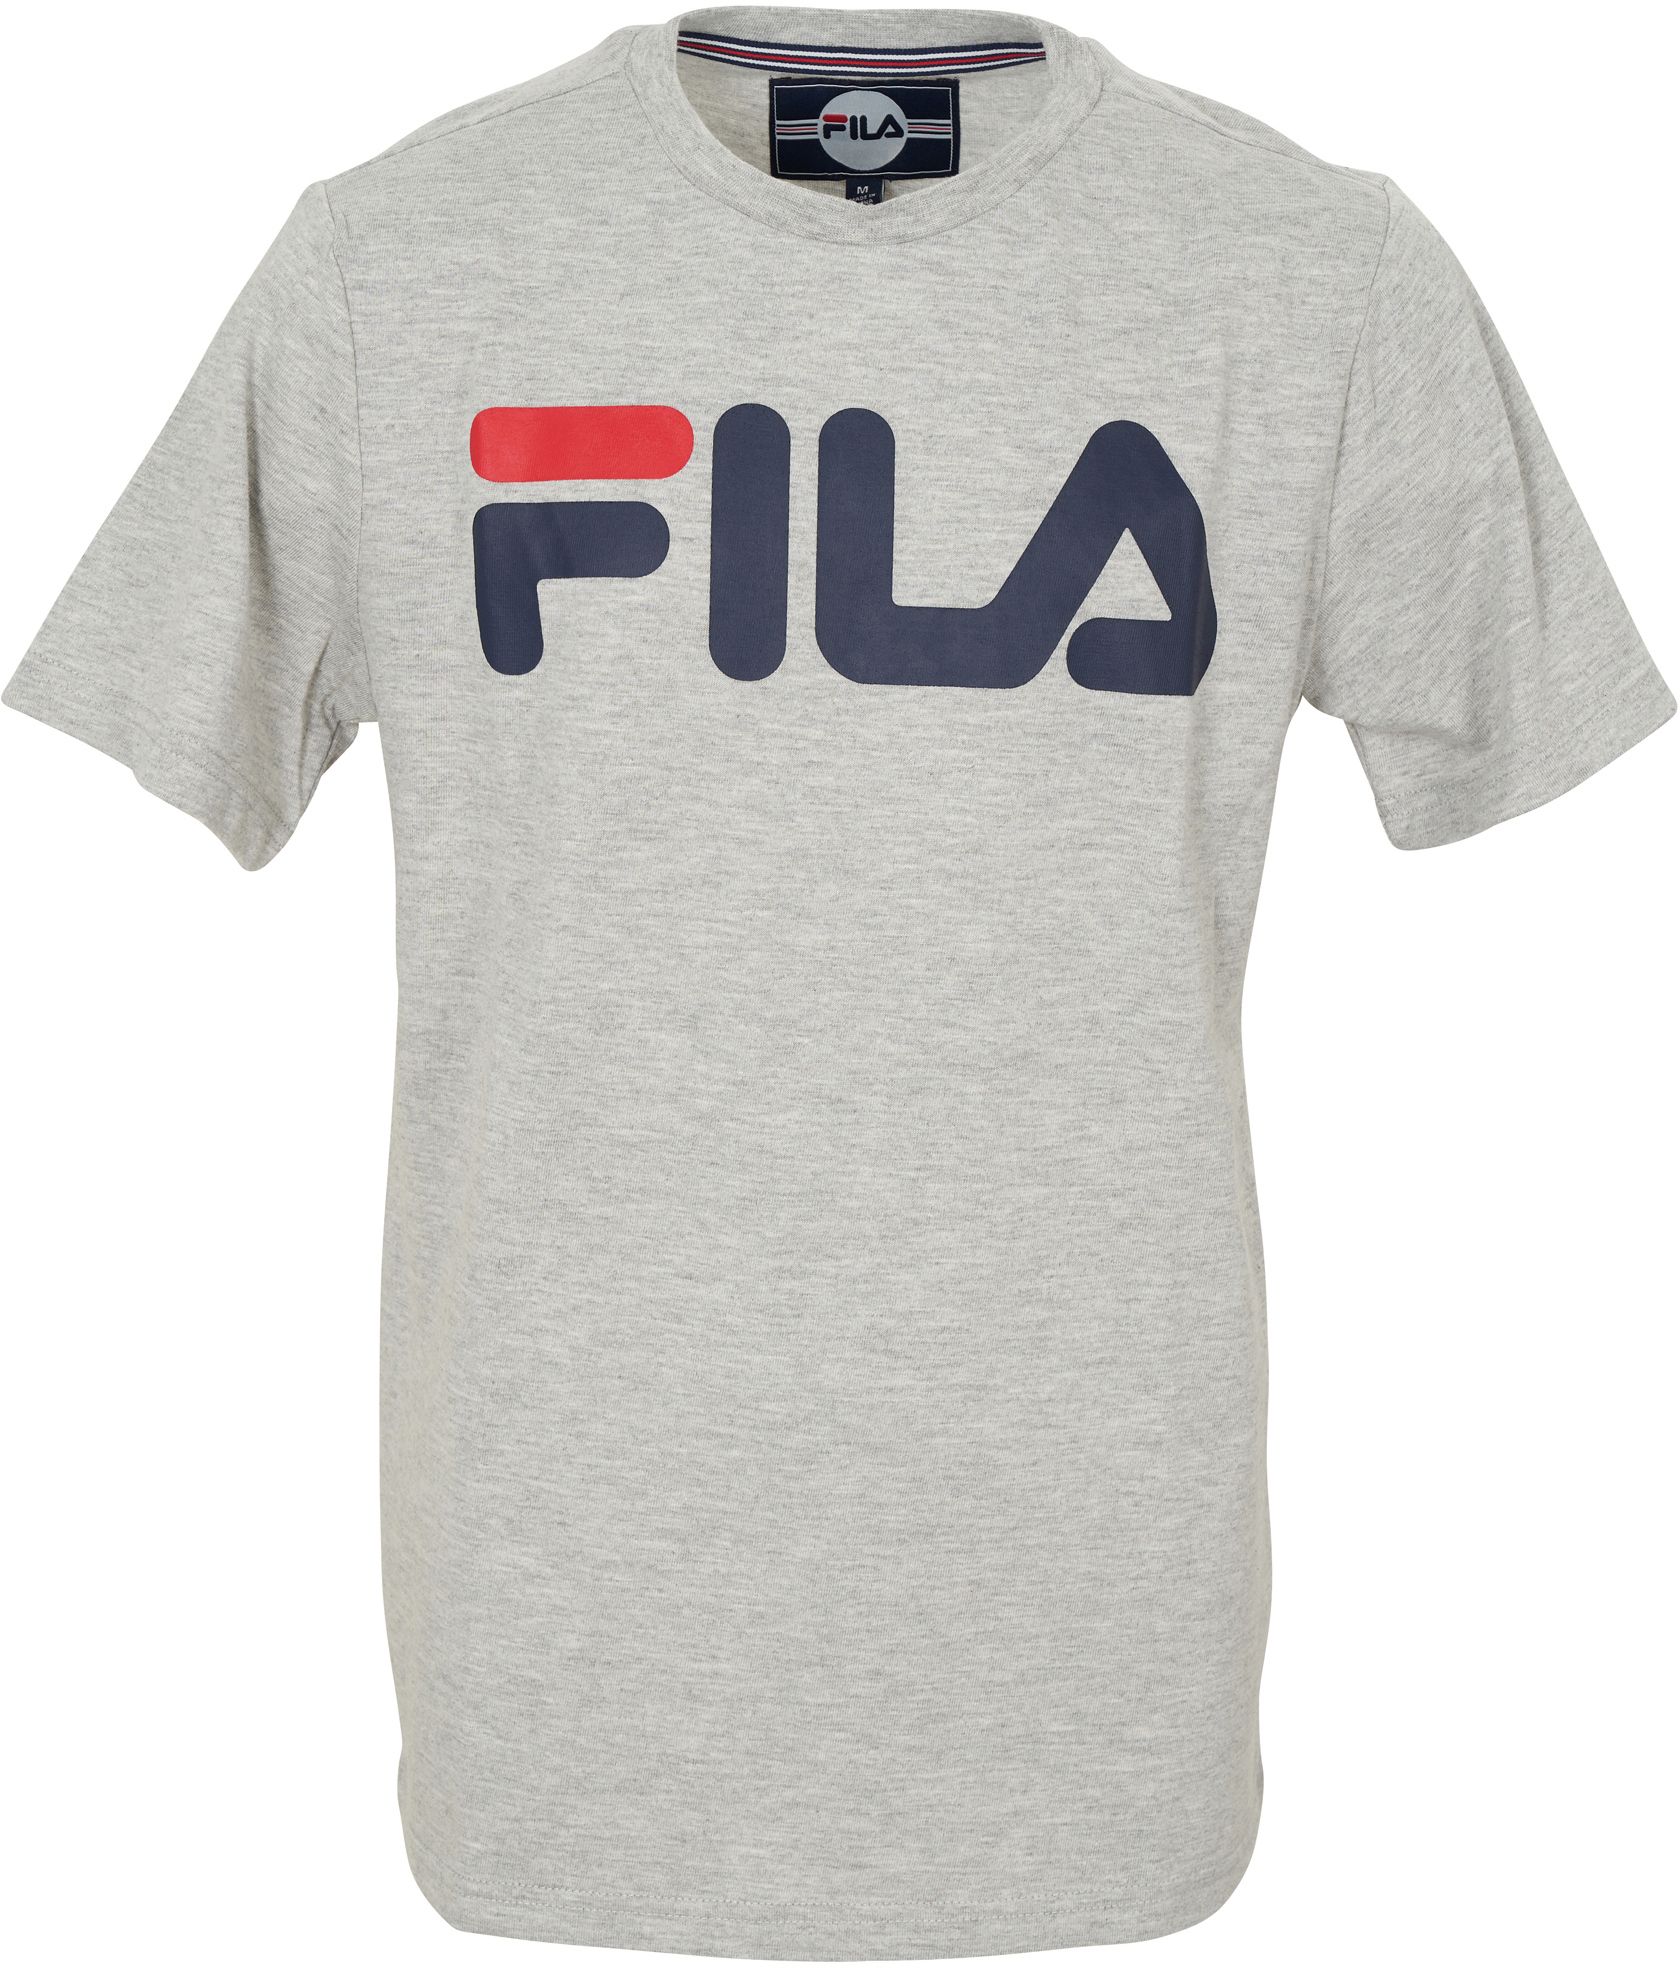 fila classic logo t shirt